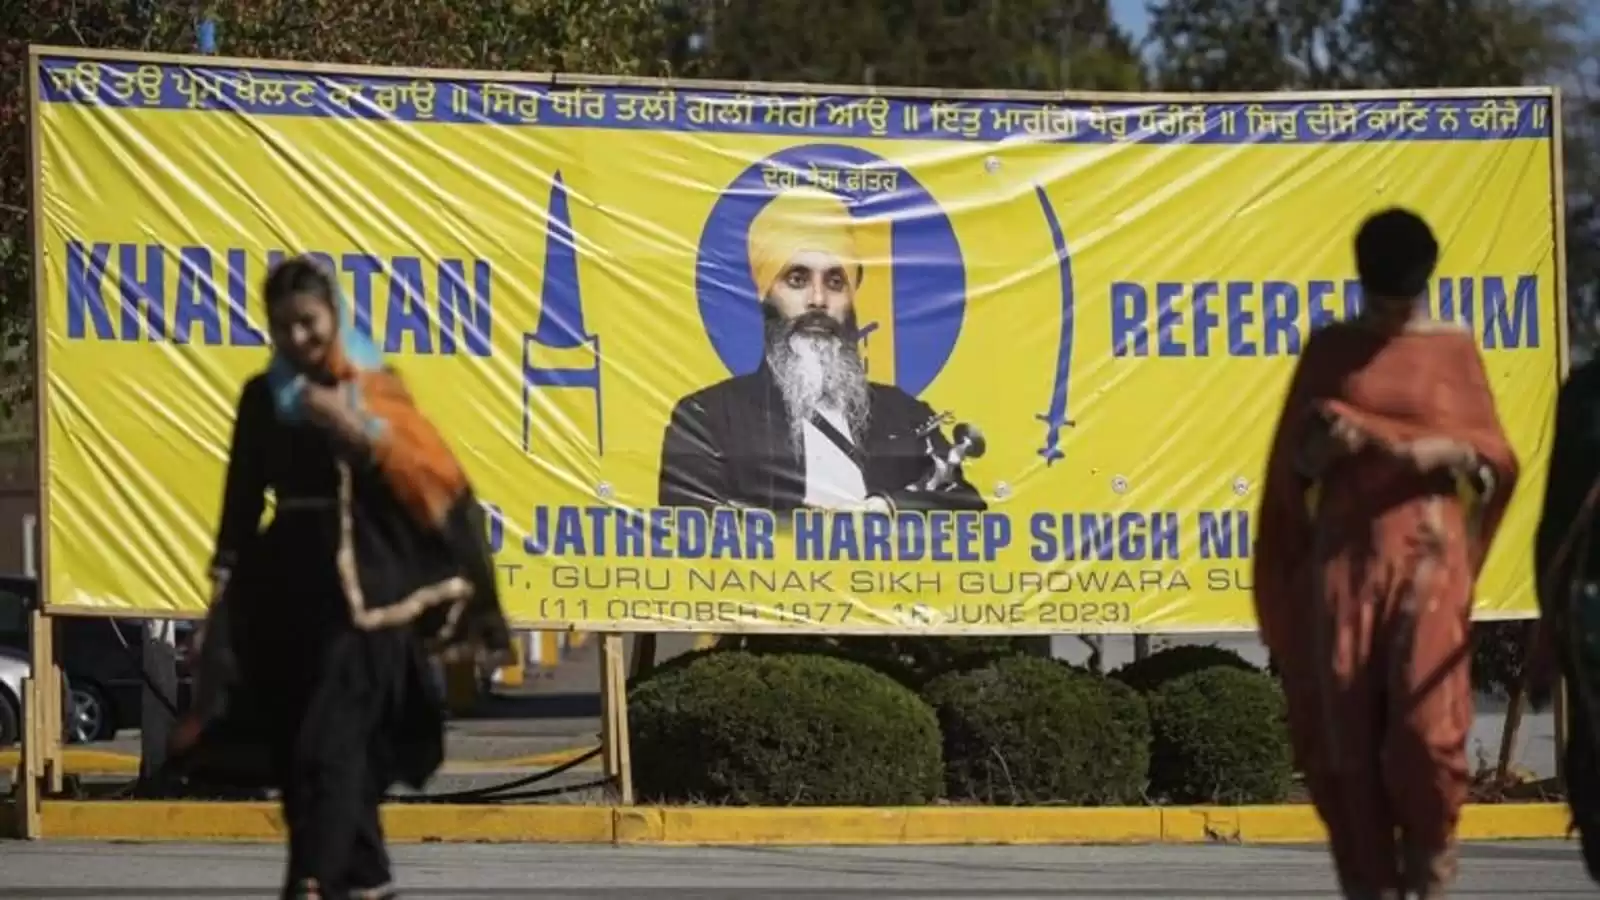 Sikh group threatens Indian consulate shutdown in Canada over Hardeep Singh Nijjar alleged murder